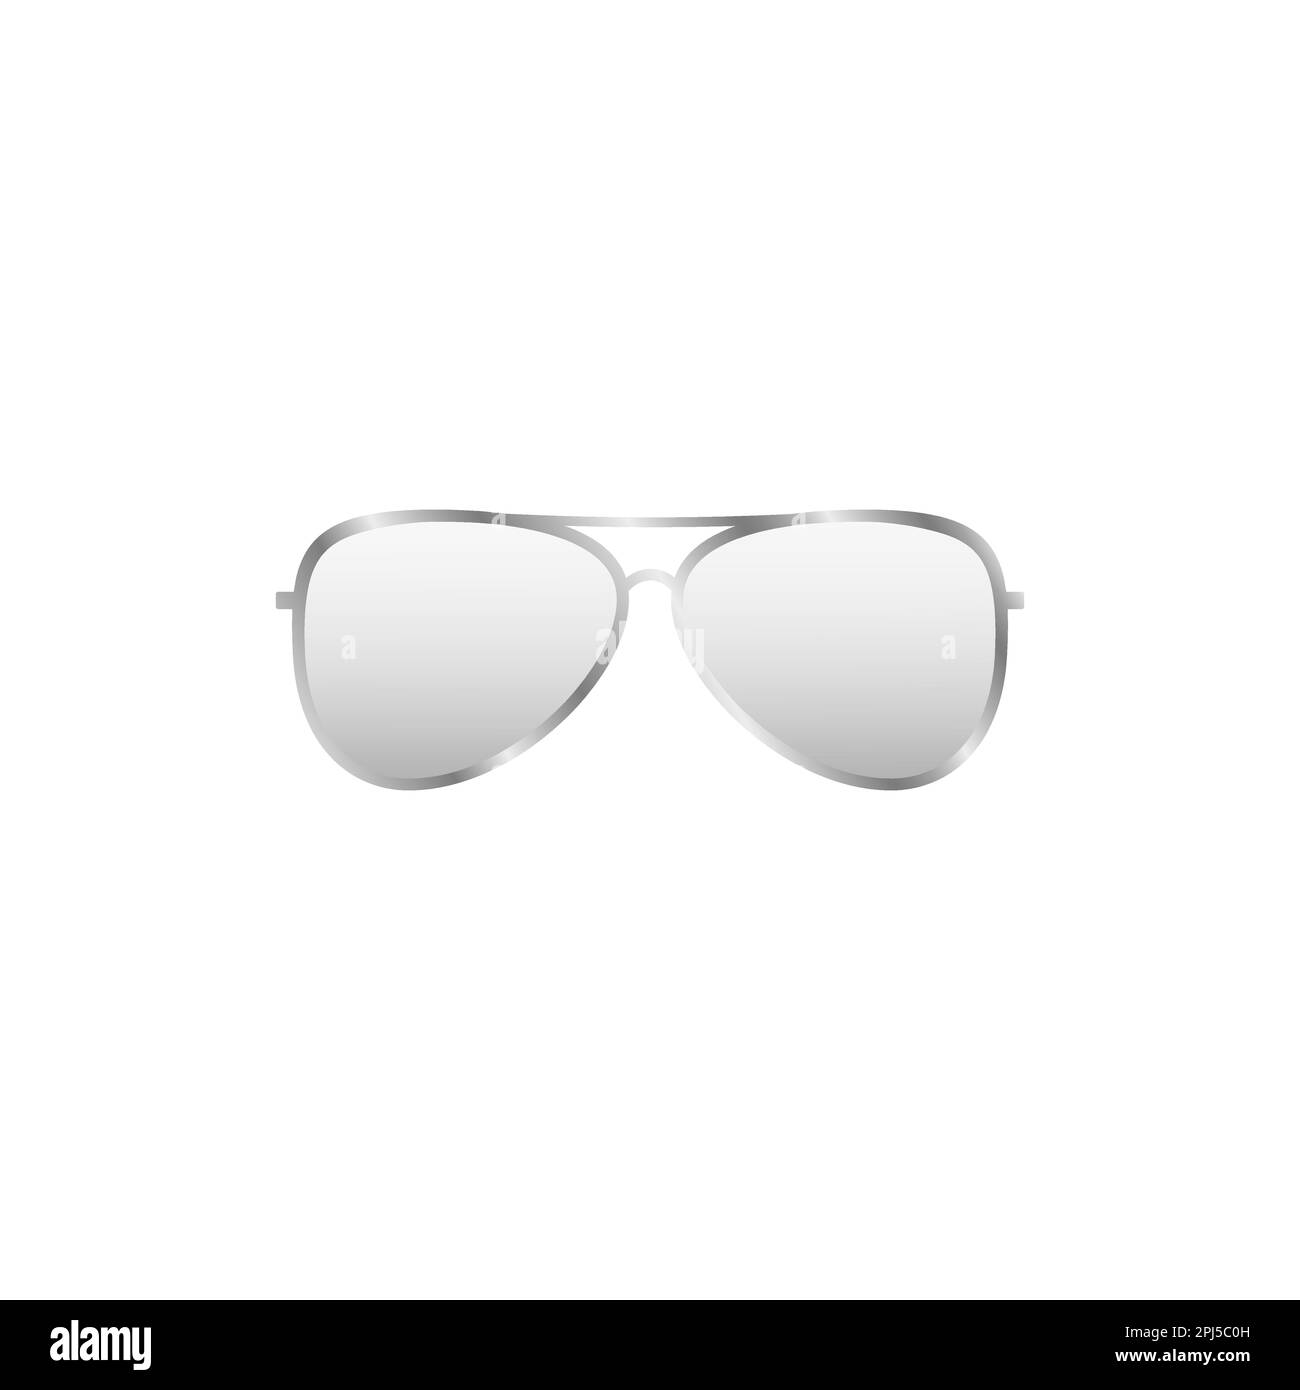 white elegance sunglasses optical accessory to protect eyes 2PJ5C0H